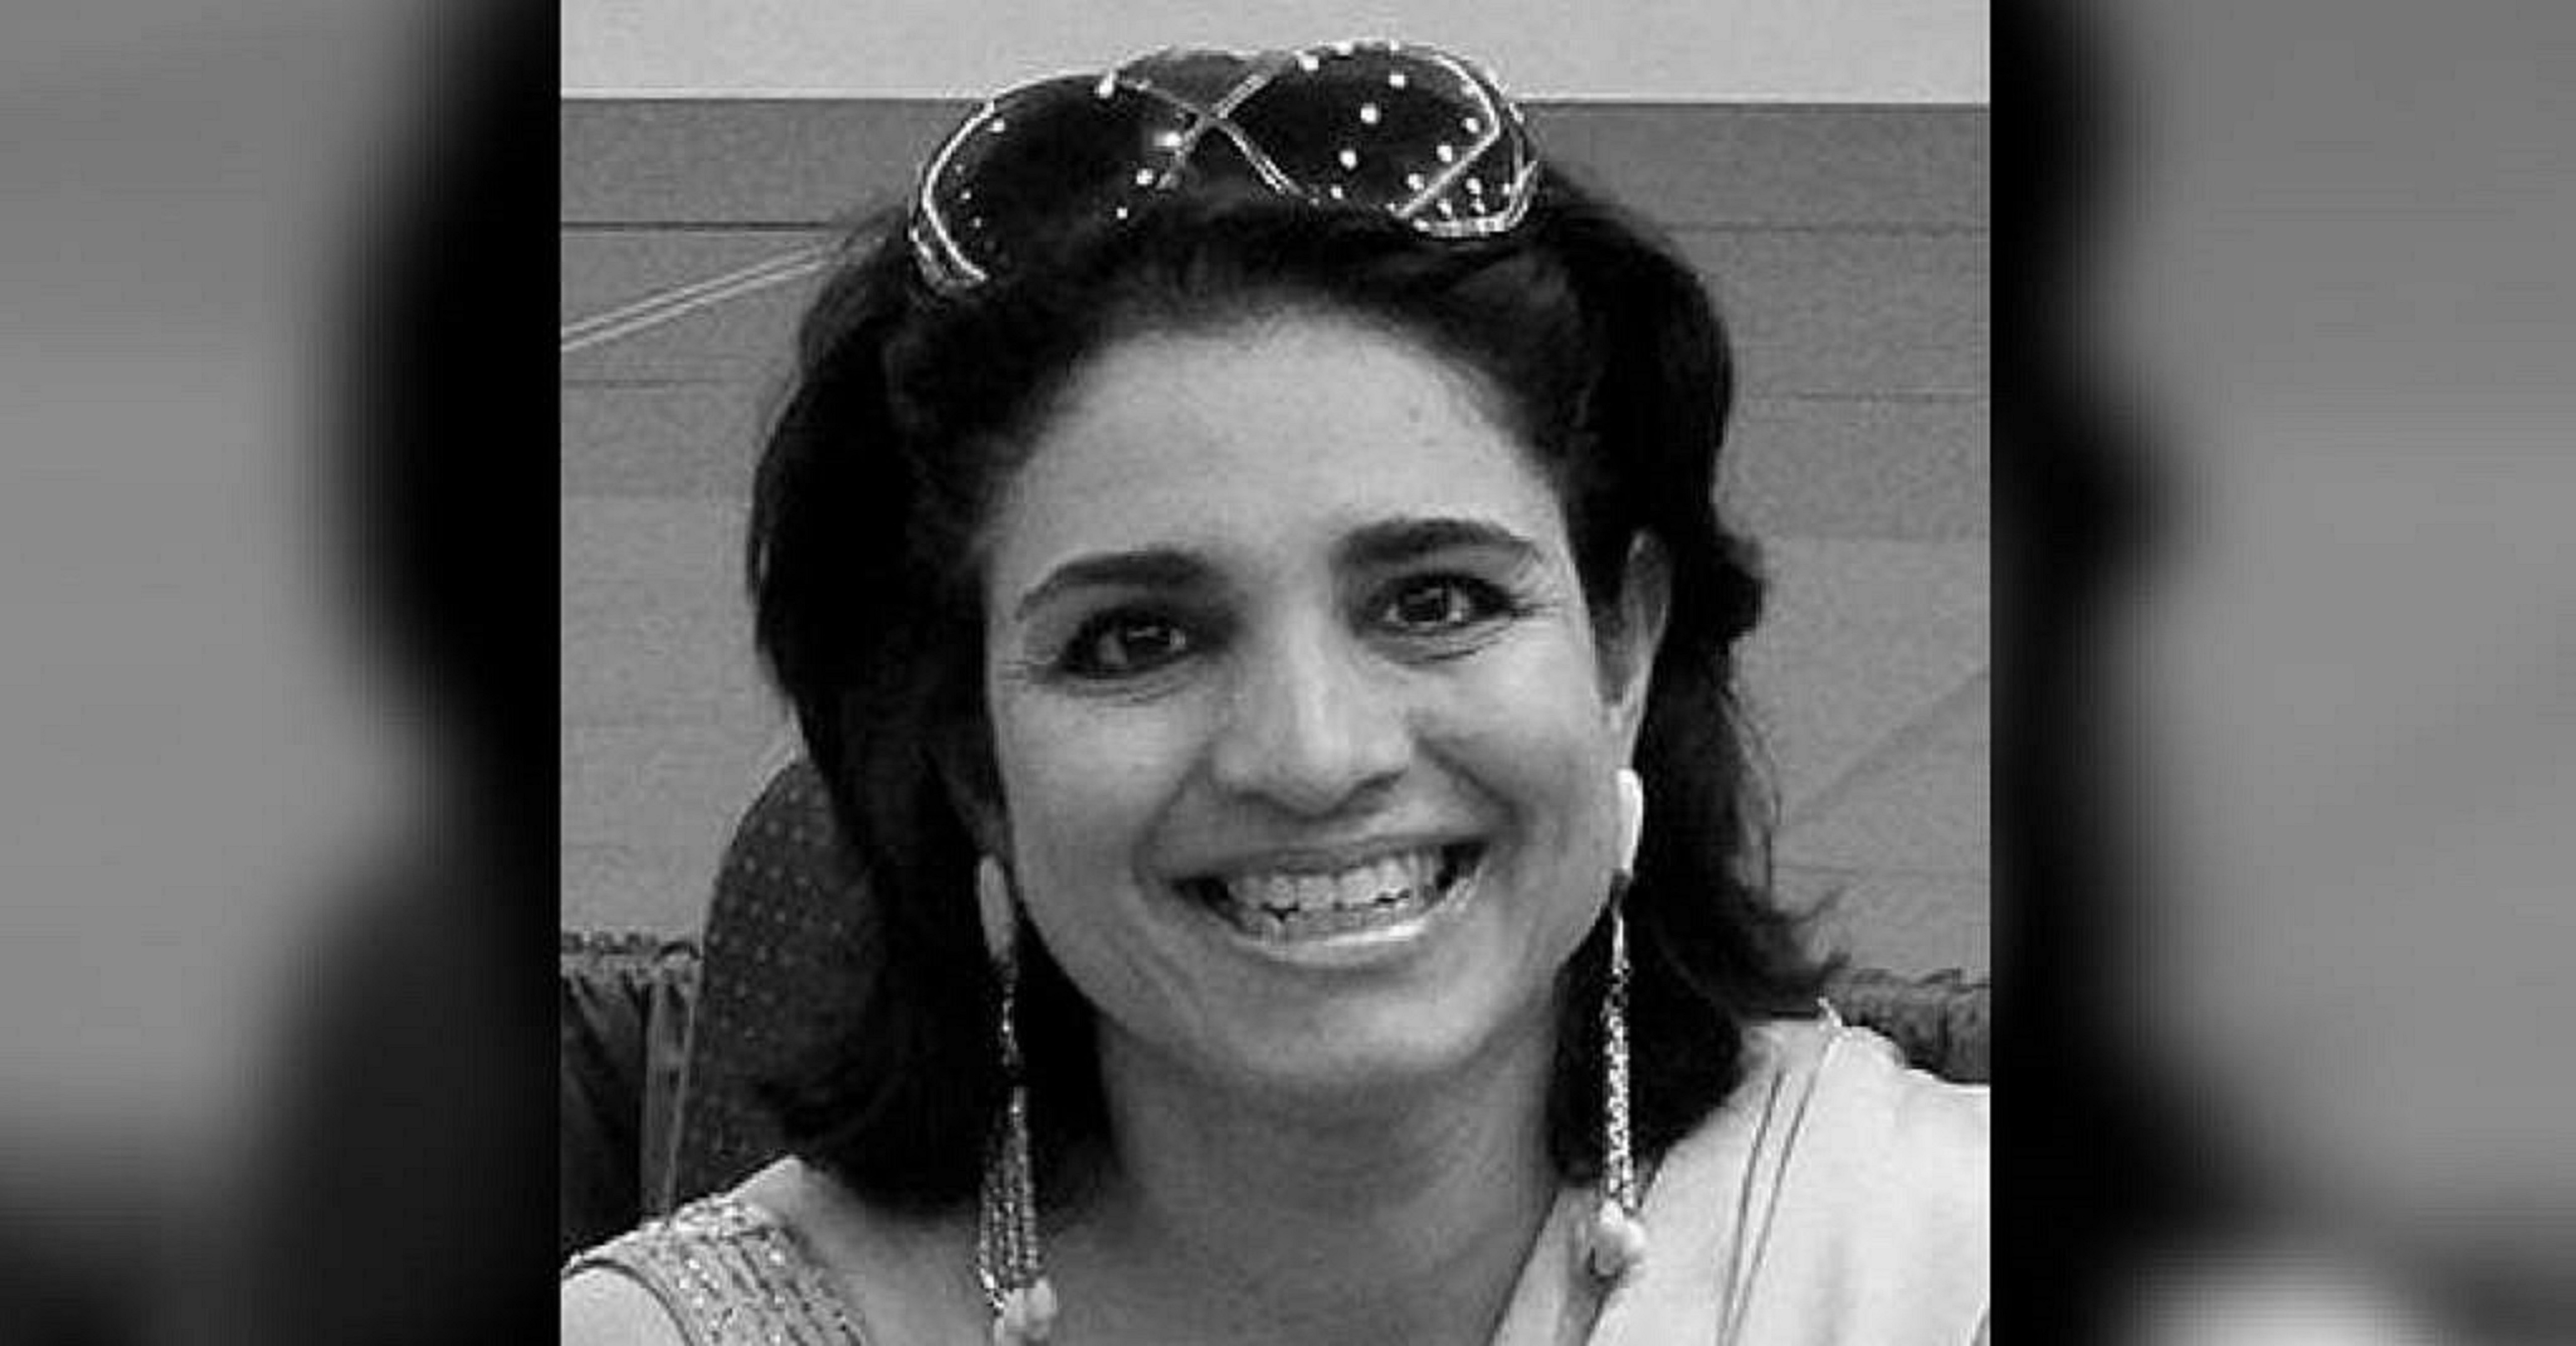 Aditi Chaudhary